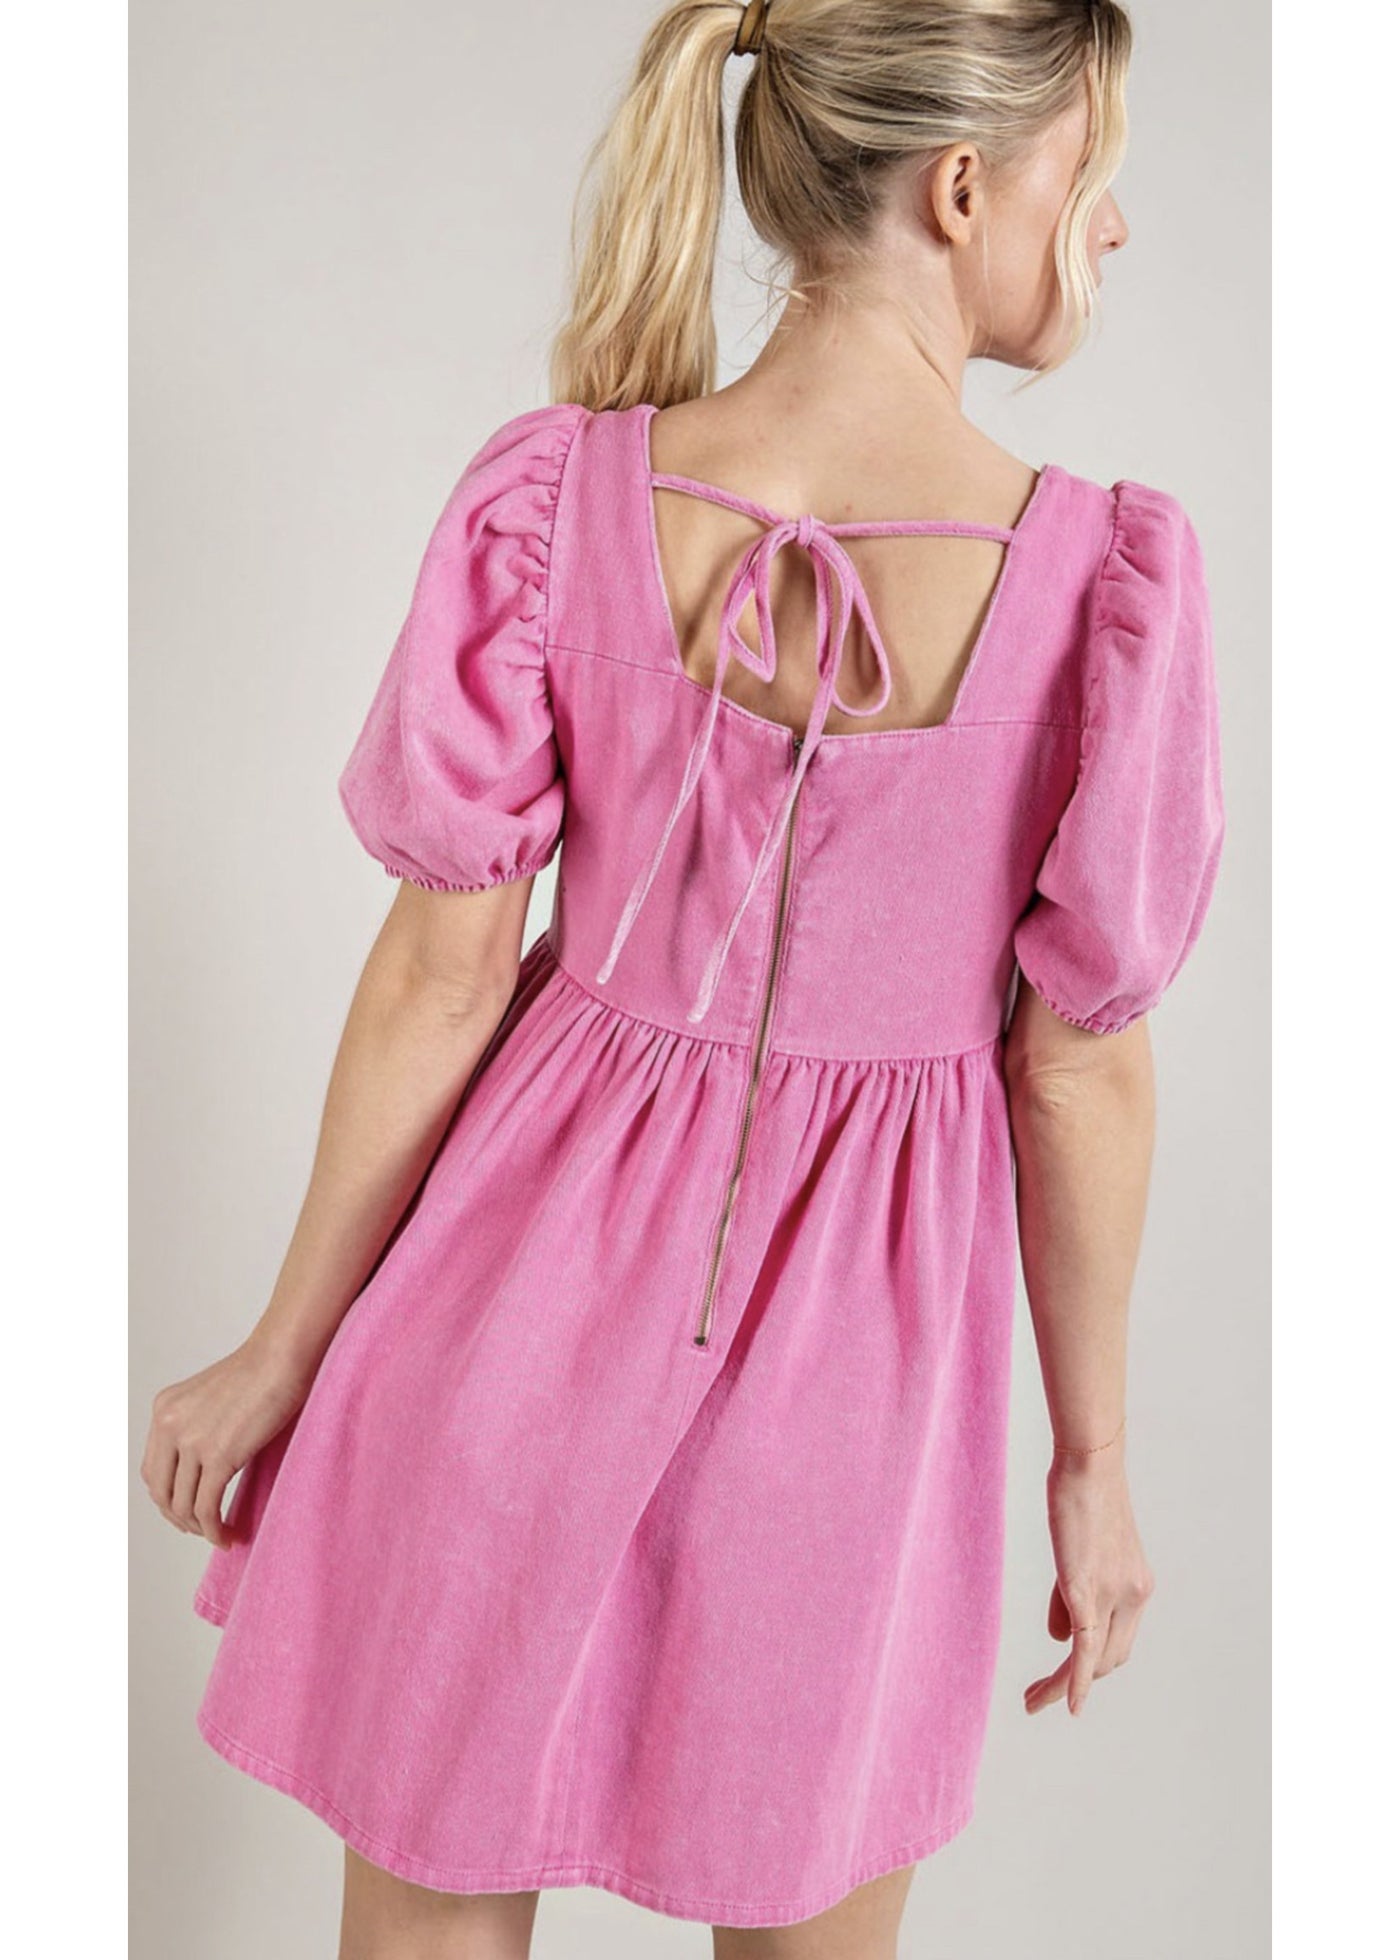 The Pretty in Pink Denim Mini Dress